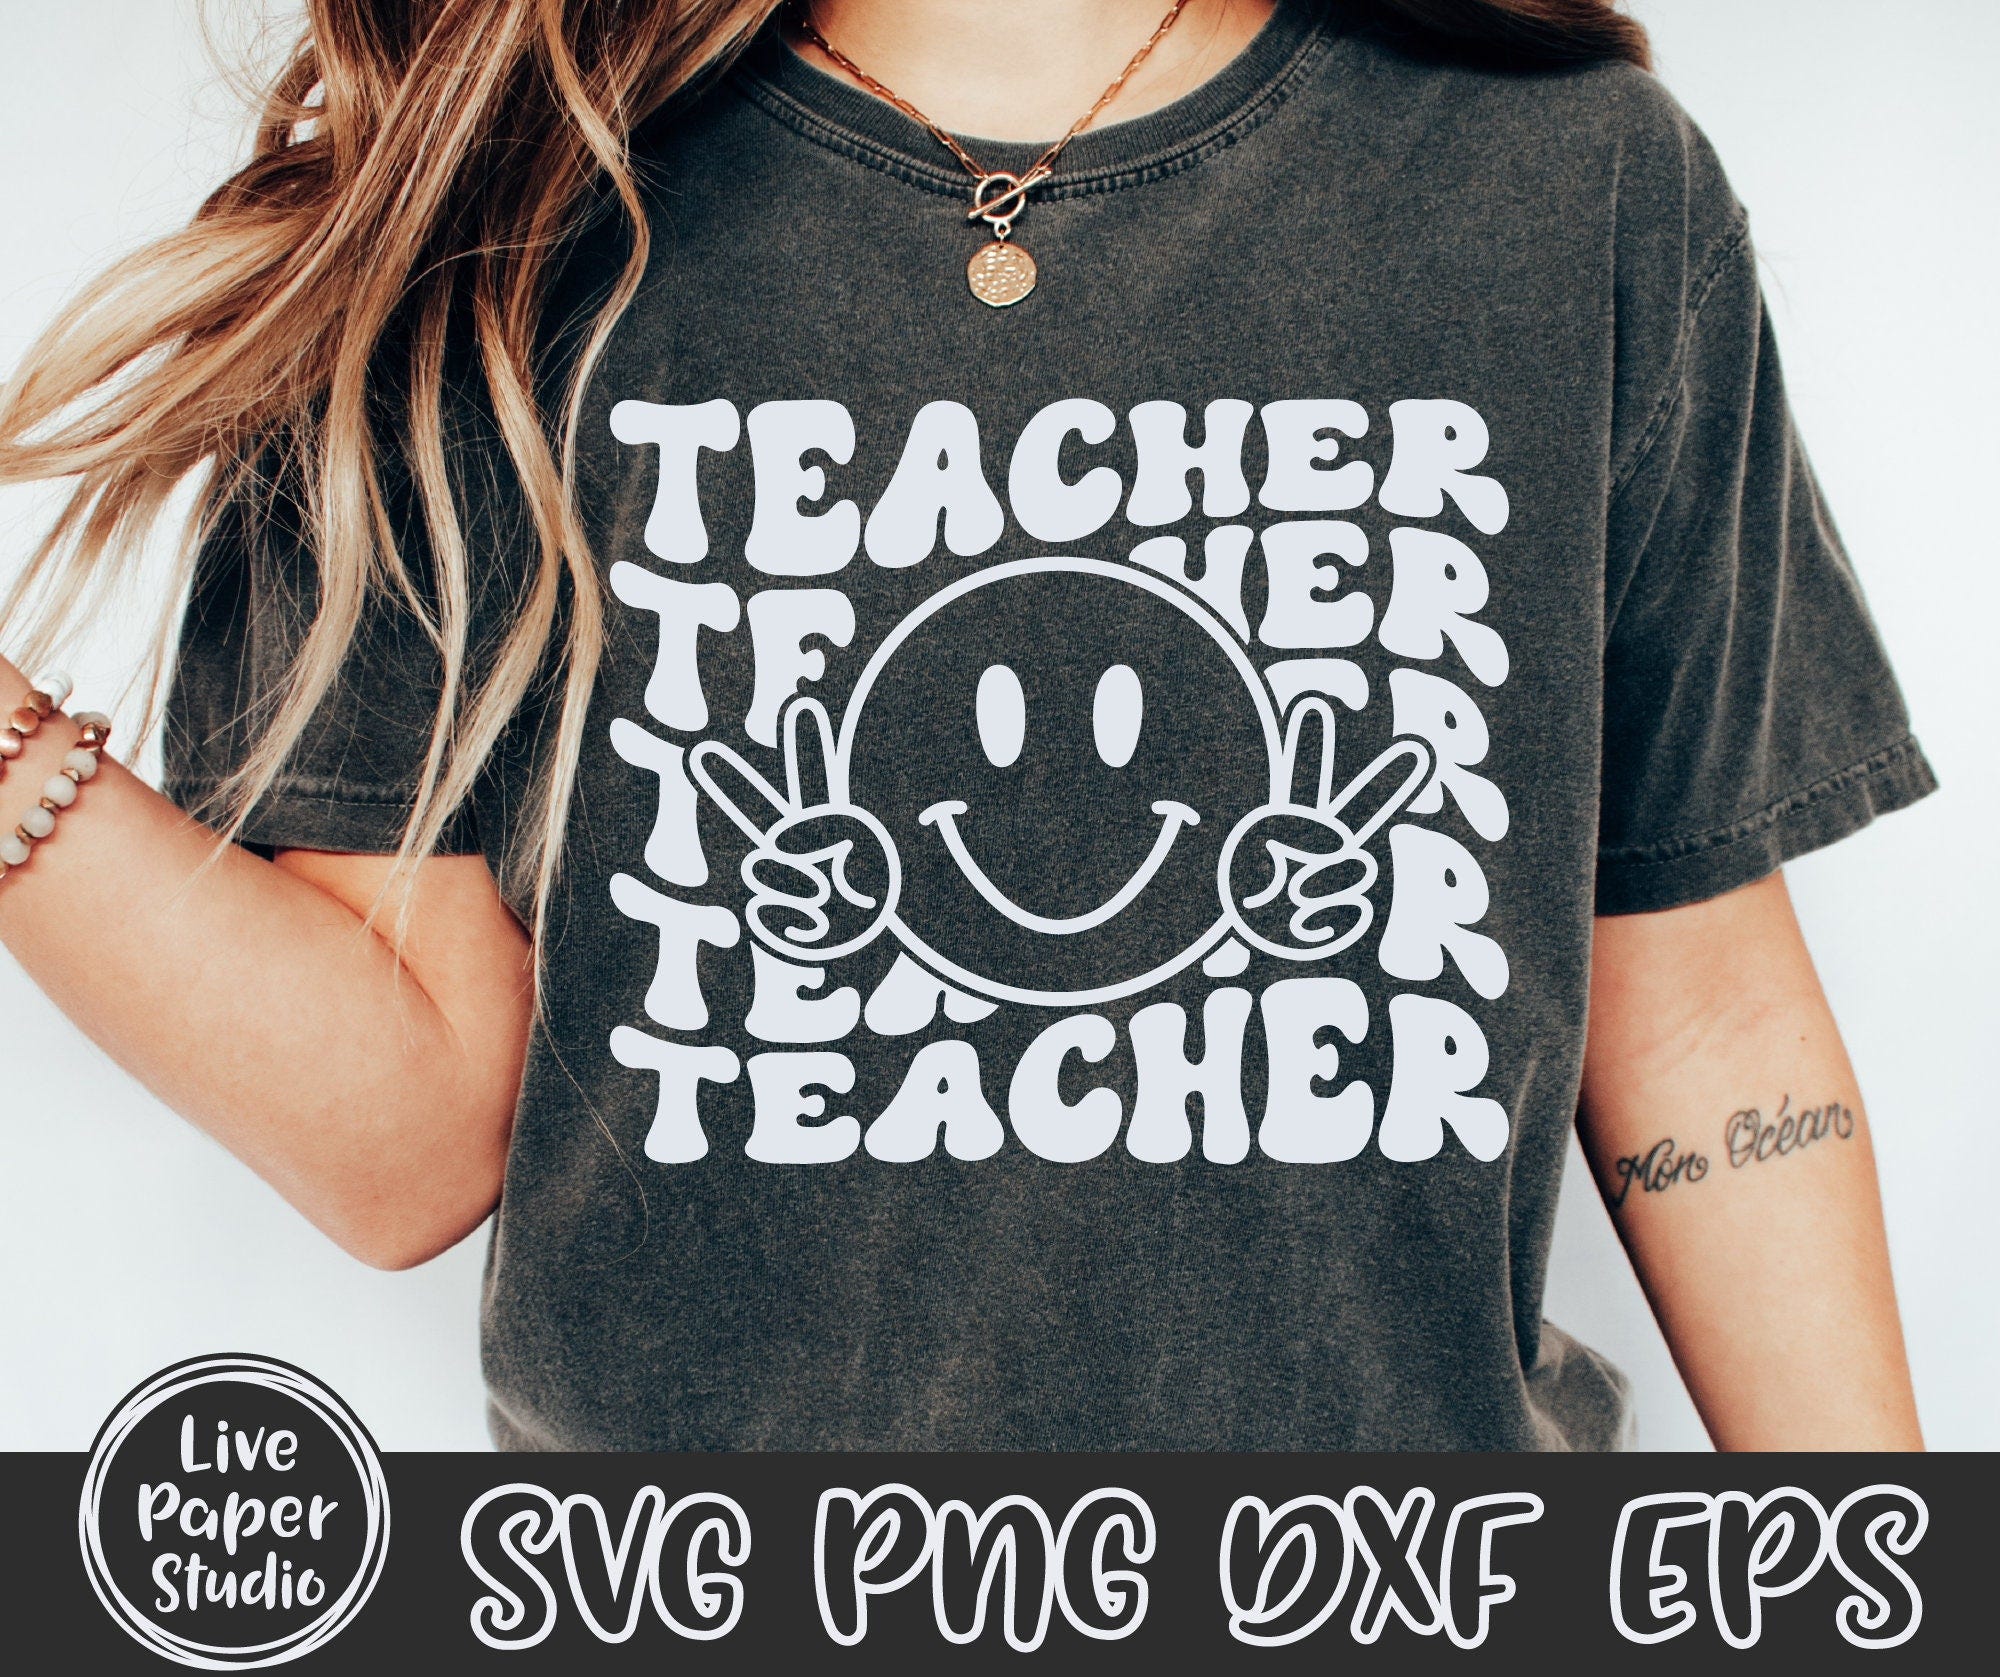 Teacher SVG, Teacher Shirt Svg, RetroTeacher Svg, Educator Svg, Teacher Life Svg, Back to School Svg, Digital Download Png, Dxf, Eps Files